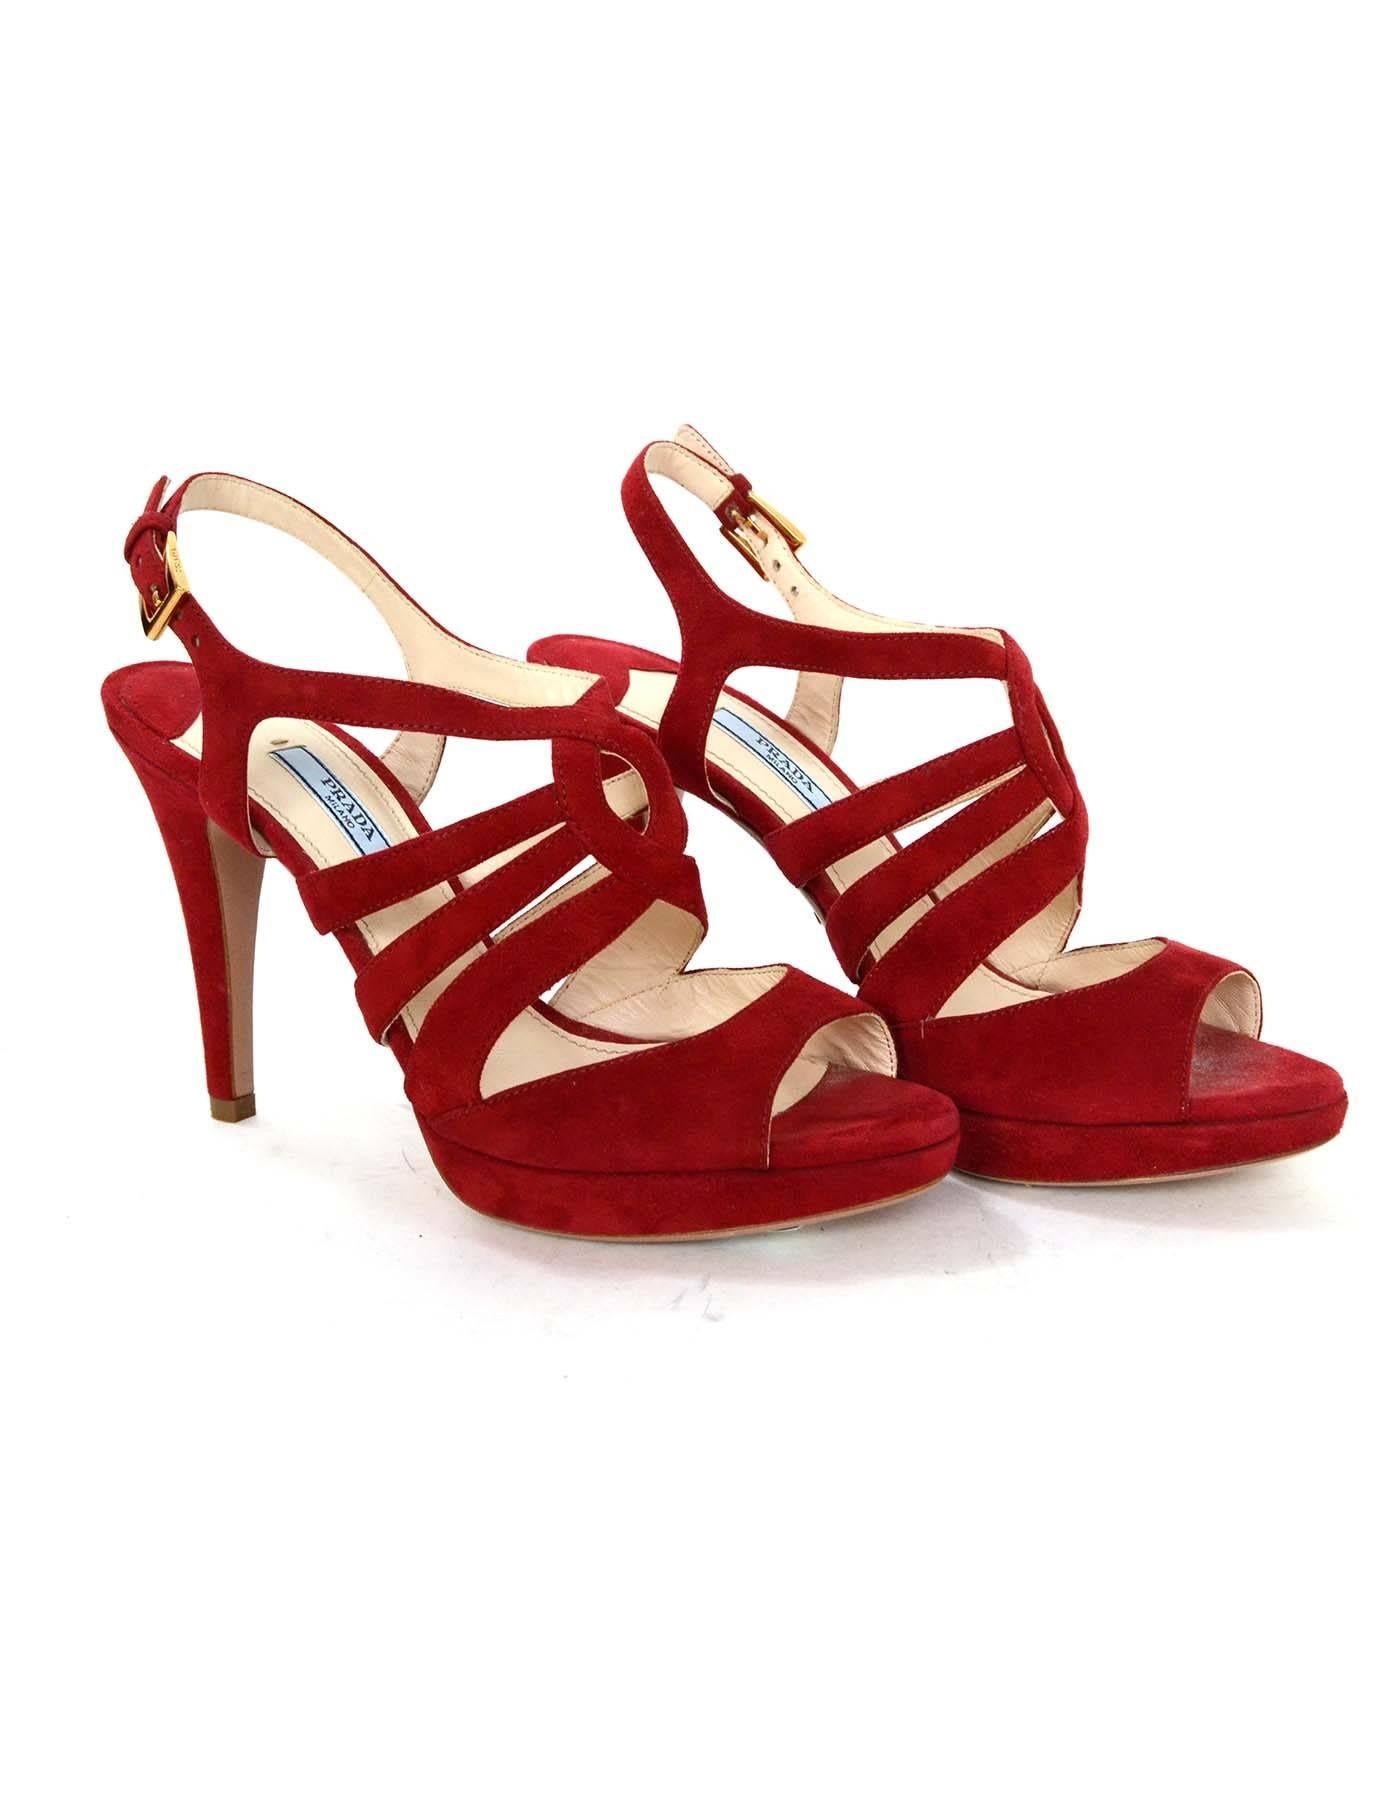 Women's Prada Red Suede Strappy Sandals sz 38